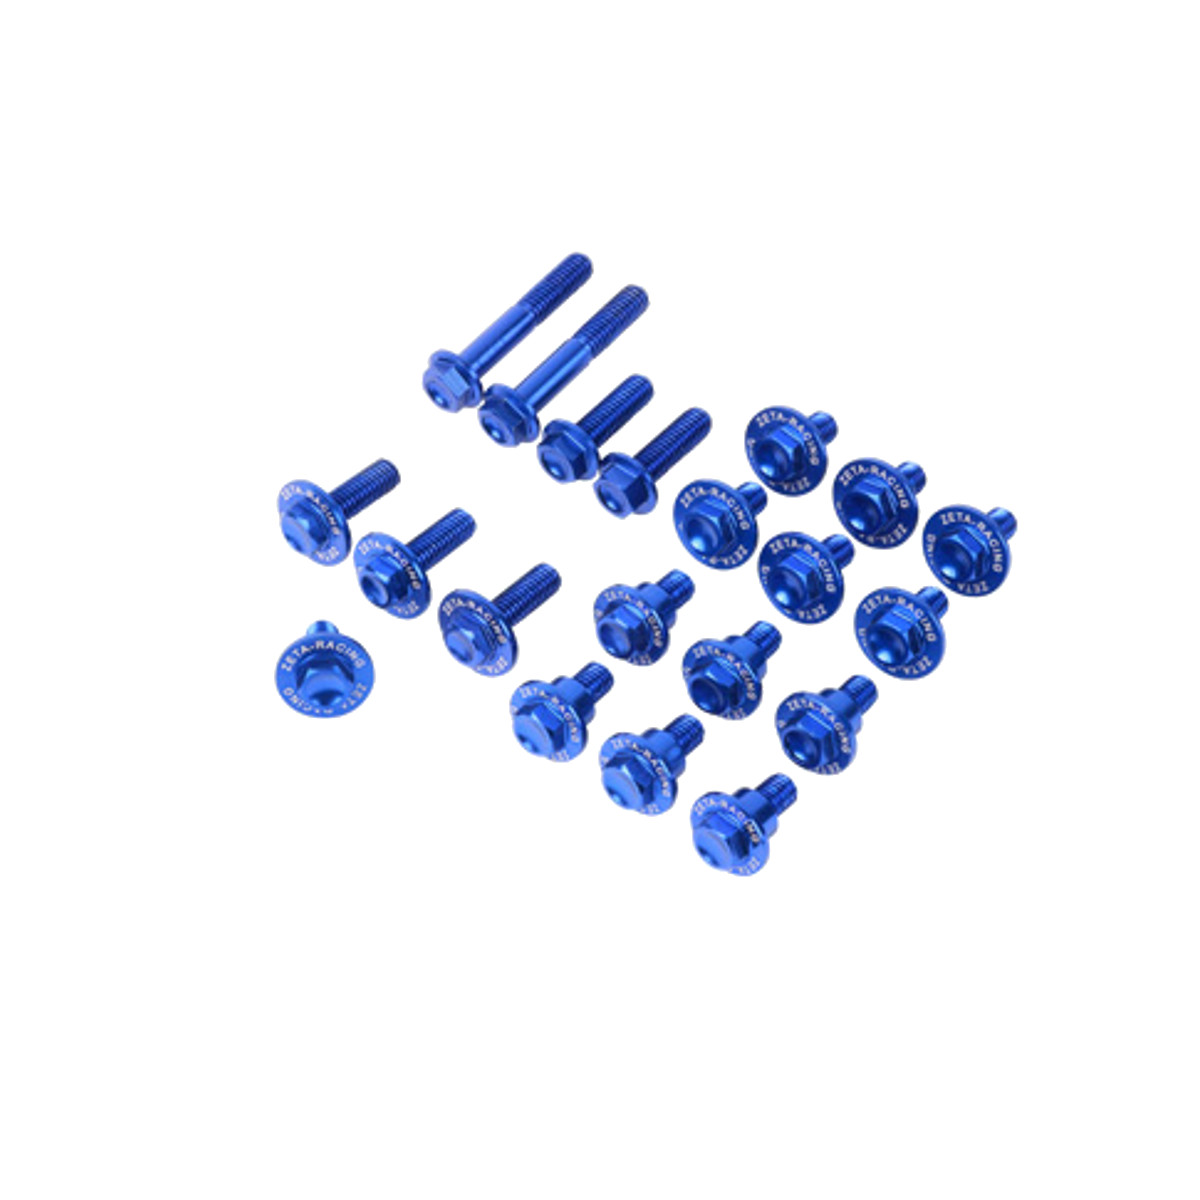 Zeta Schraubenkit  für Plastikteile, Yamaha YZ-F 450 '18, Blau